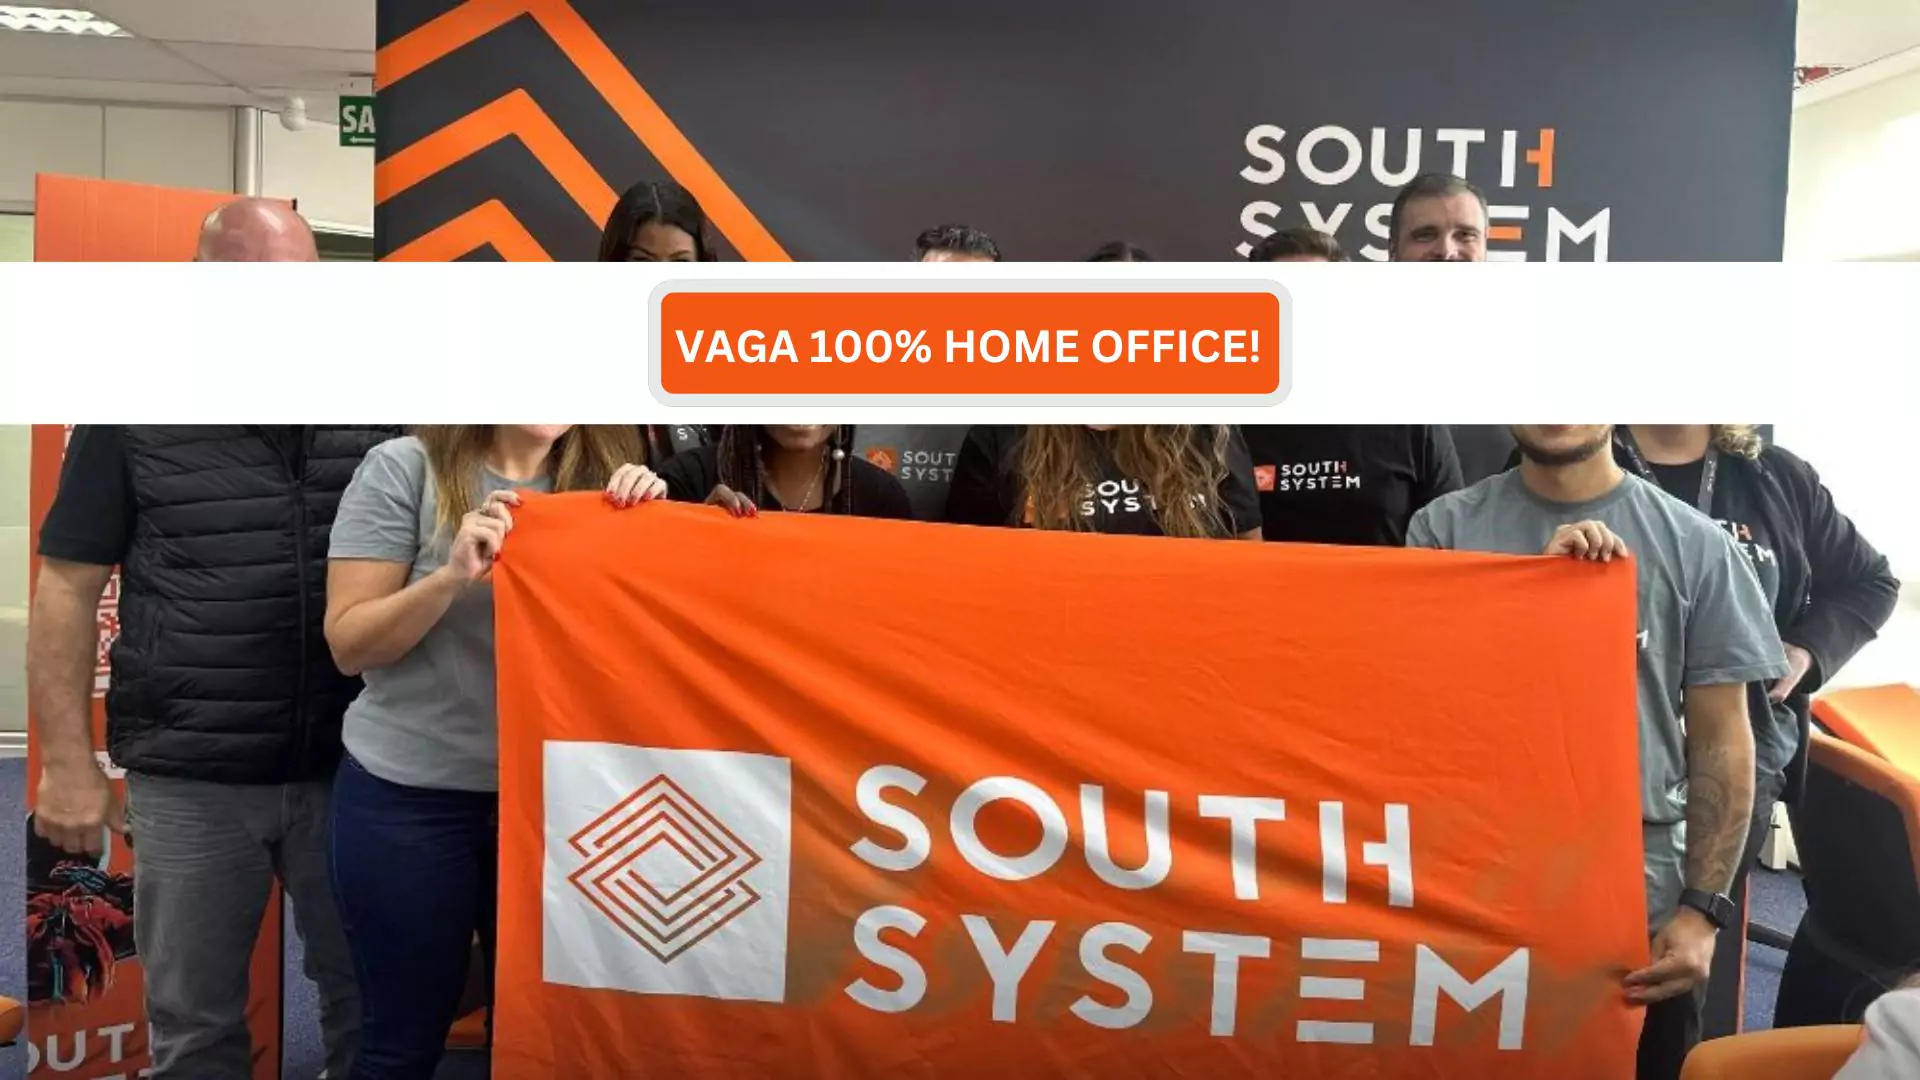 ANALISTA DE SISTEMAS: Vaga 100% Home Office na South System